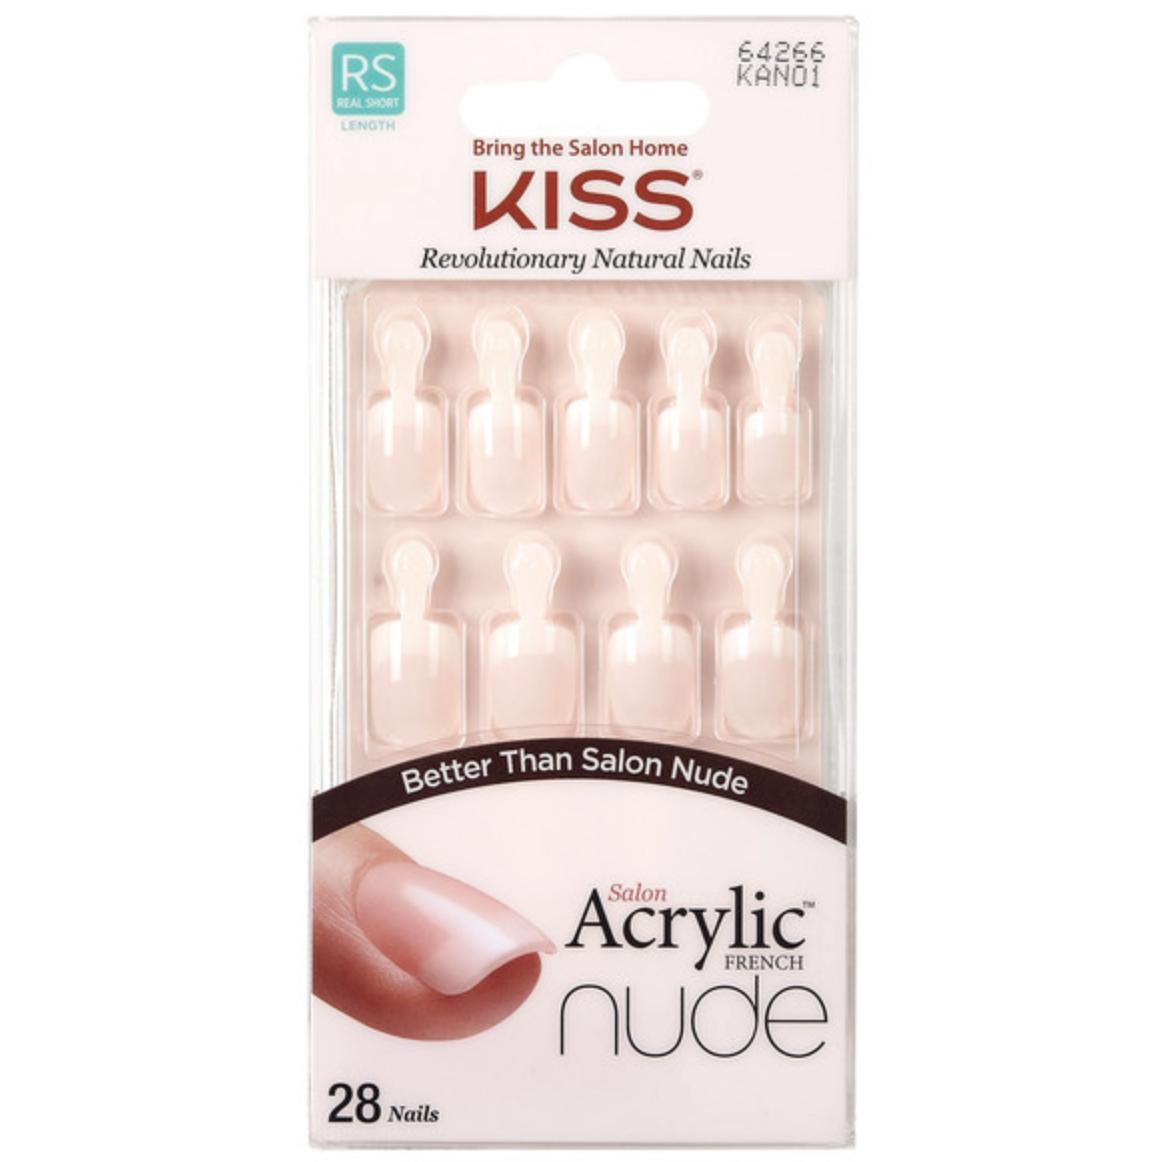 Kiss Acrylic Nude Breathtaking